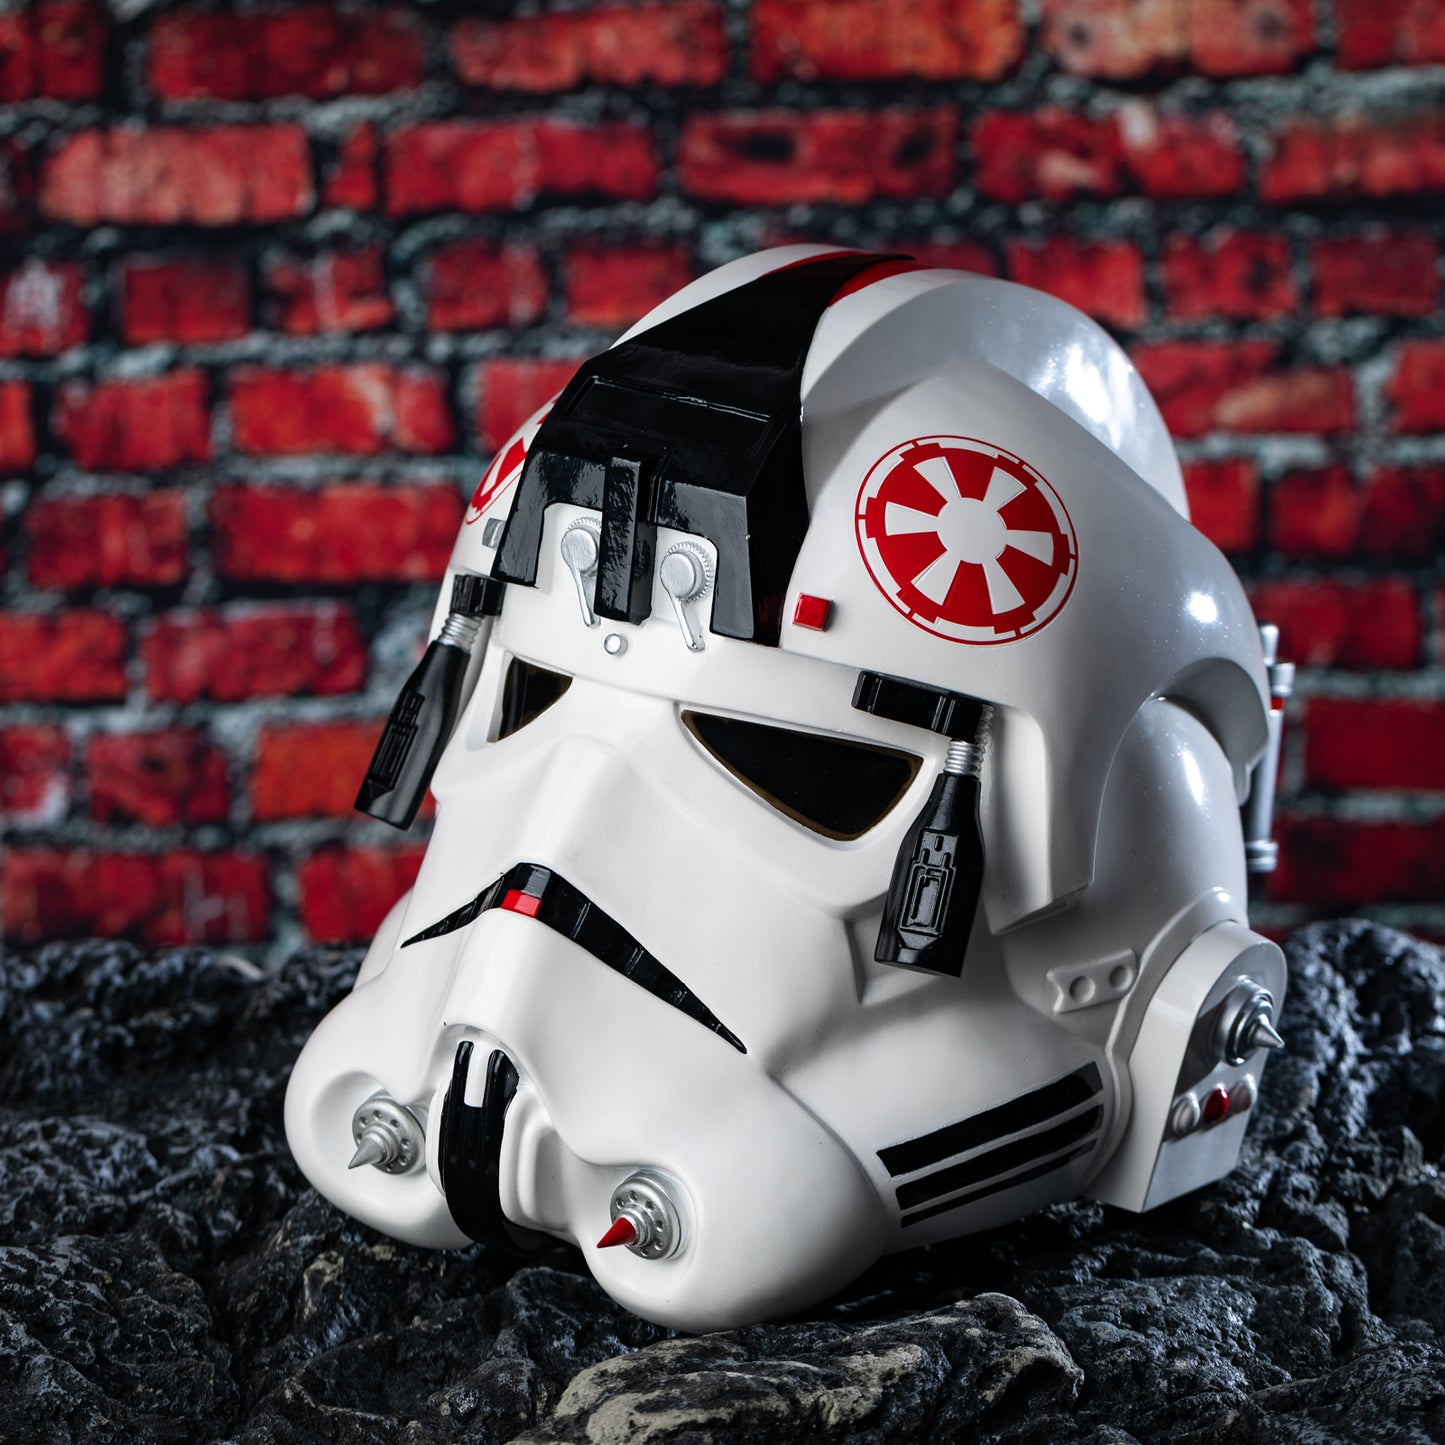 【Neu eingetroffen】Xcoser 1:1 Star Wars AT-AT Driver Pilots Helm Cosplay Prop Resin Replica Erwachsene